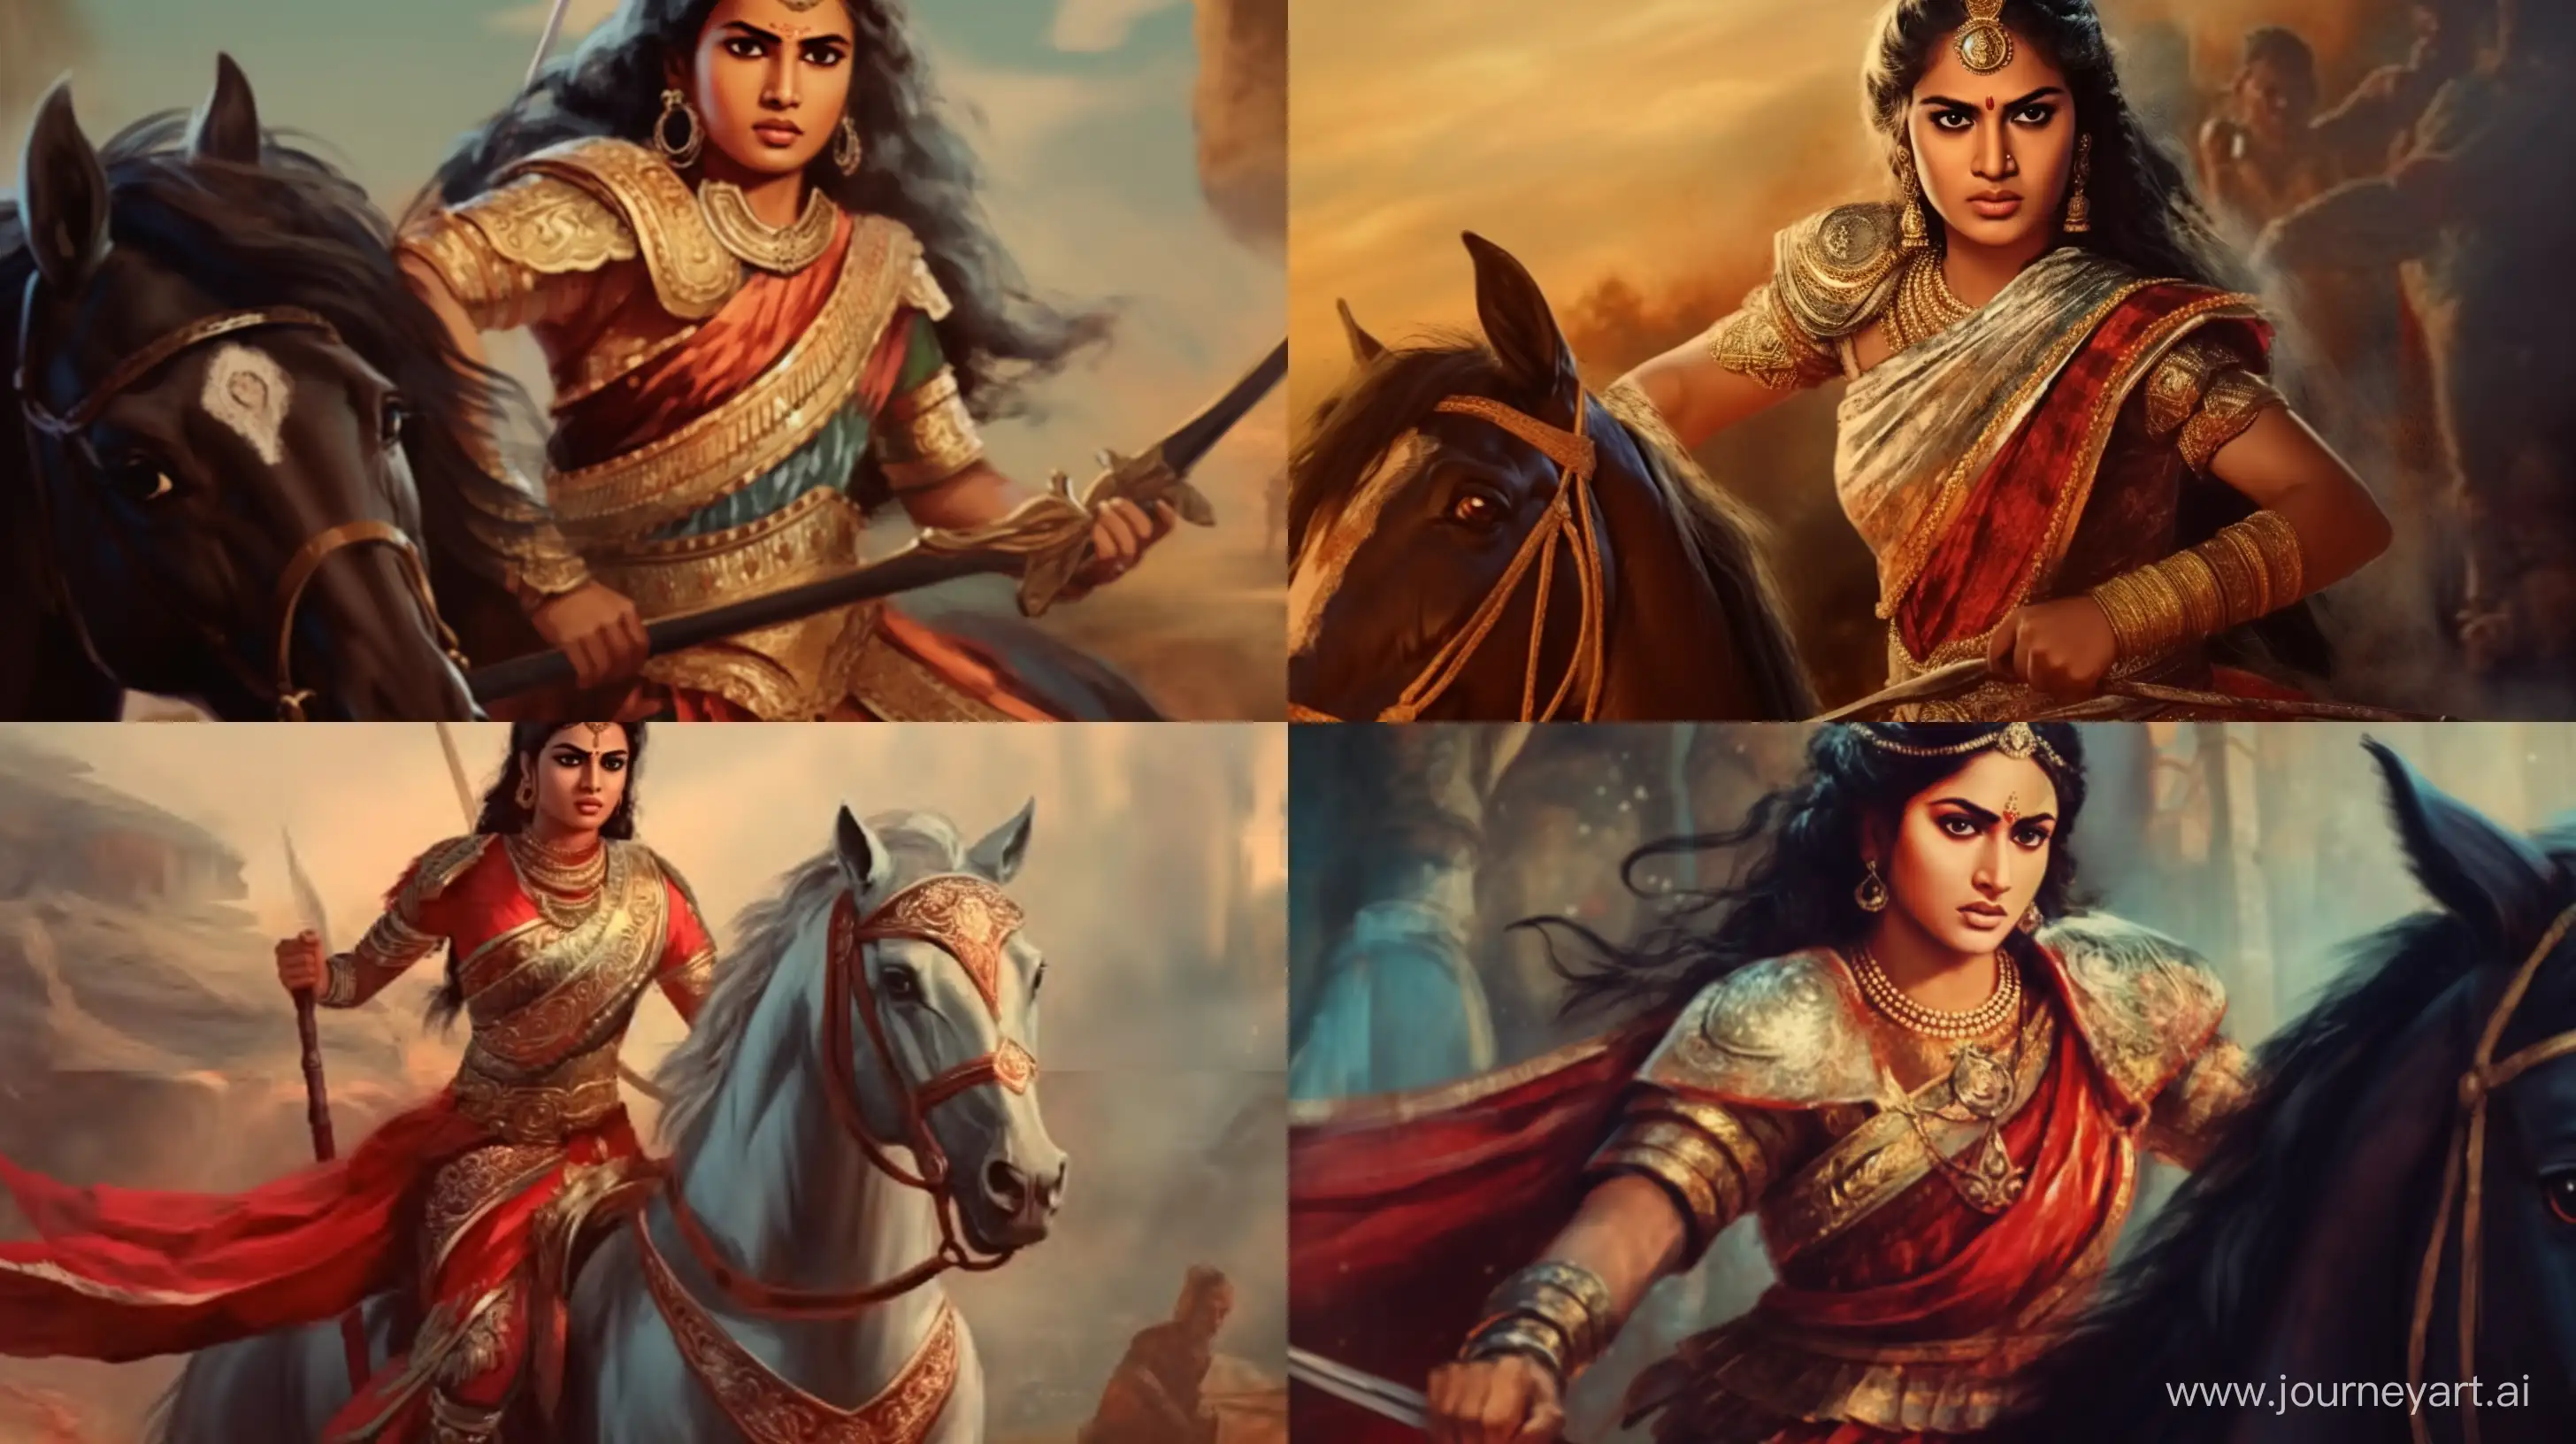 Dynamic-Tamil-Women-Warriors-Raiding-on-Horseback-in-Cinematic-4K-Digital-Art